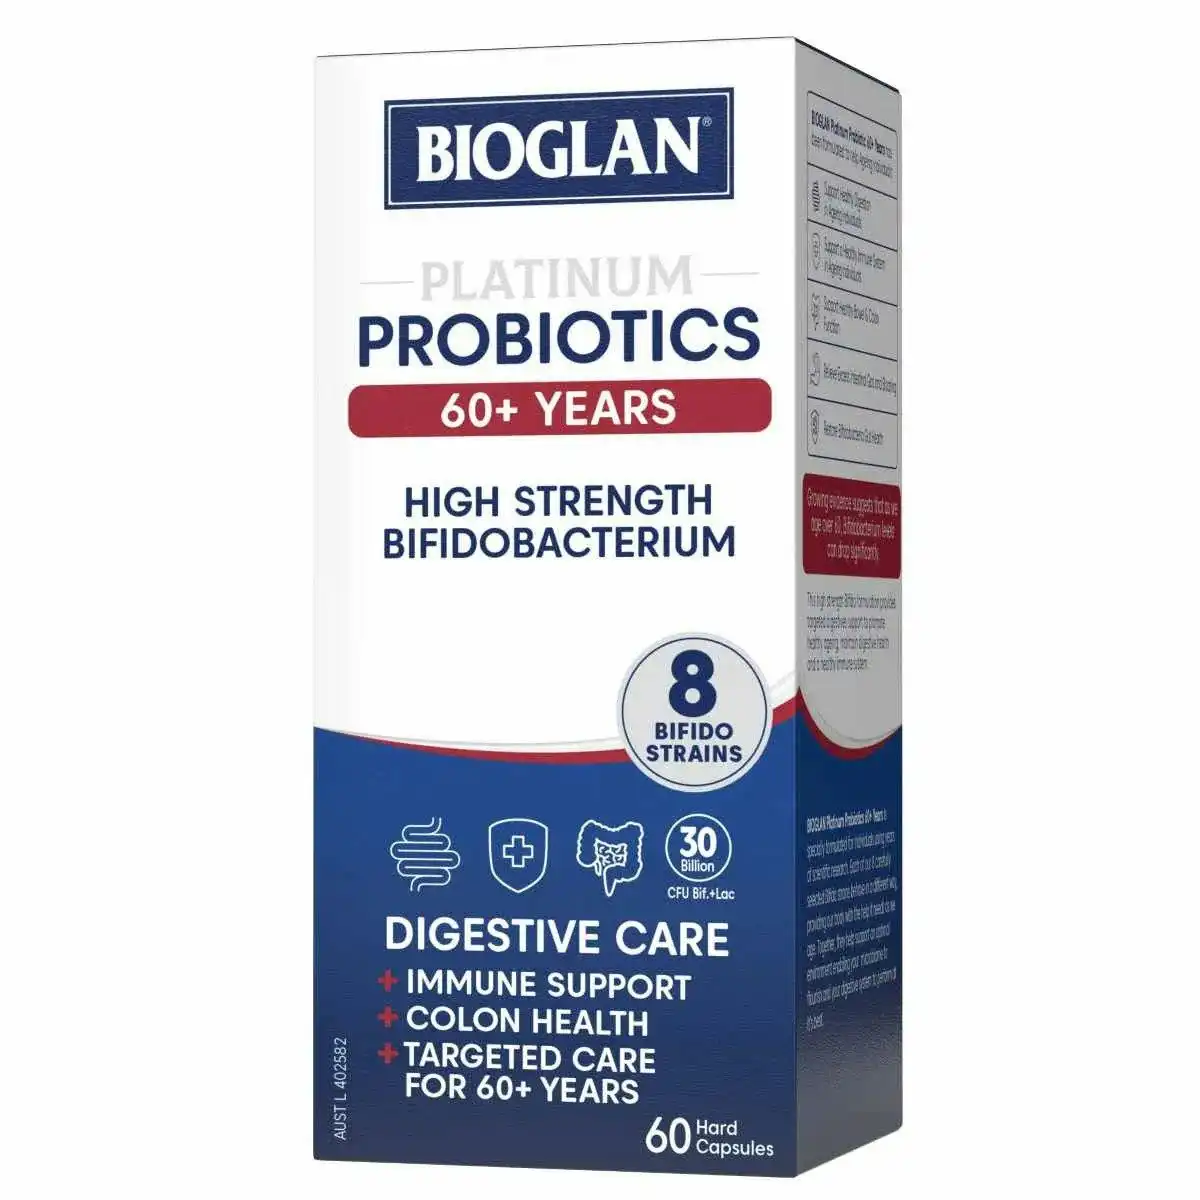 Bioglan Platinum Probiotics 60+ Years 60s